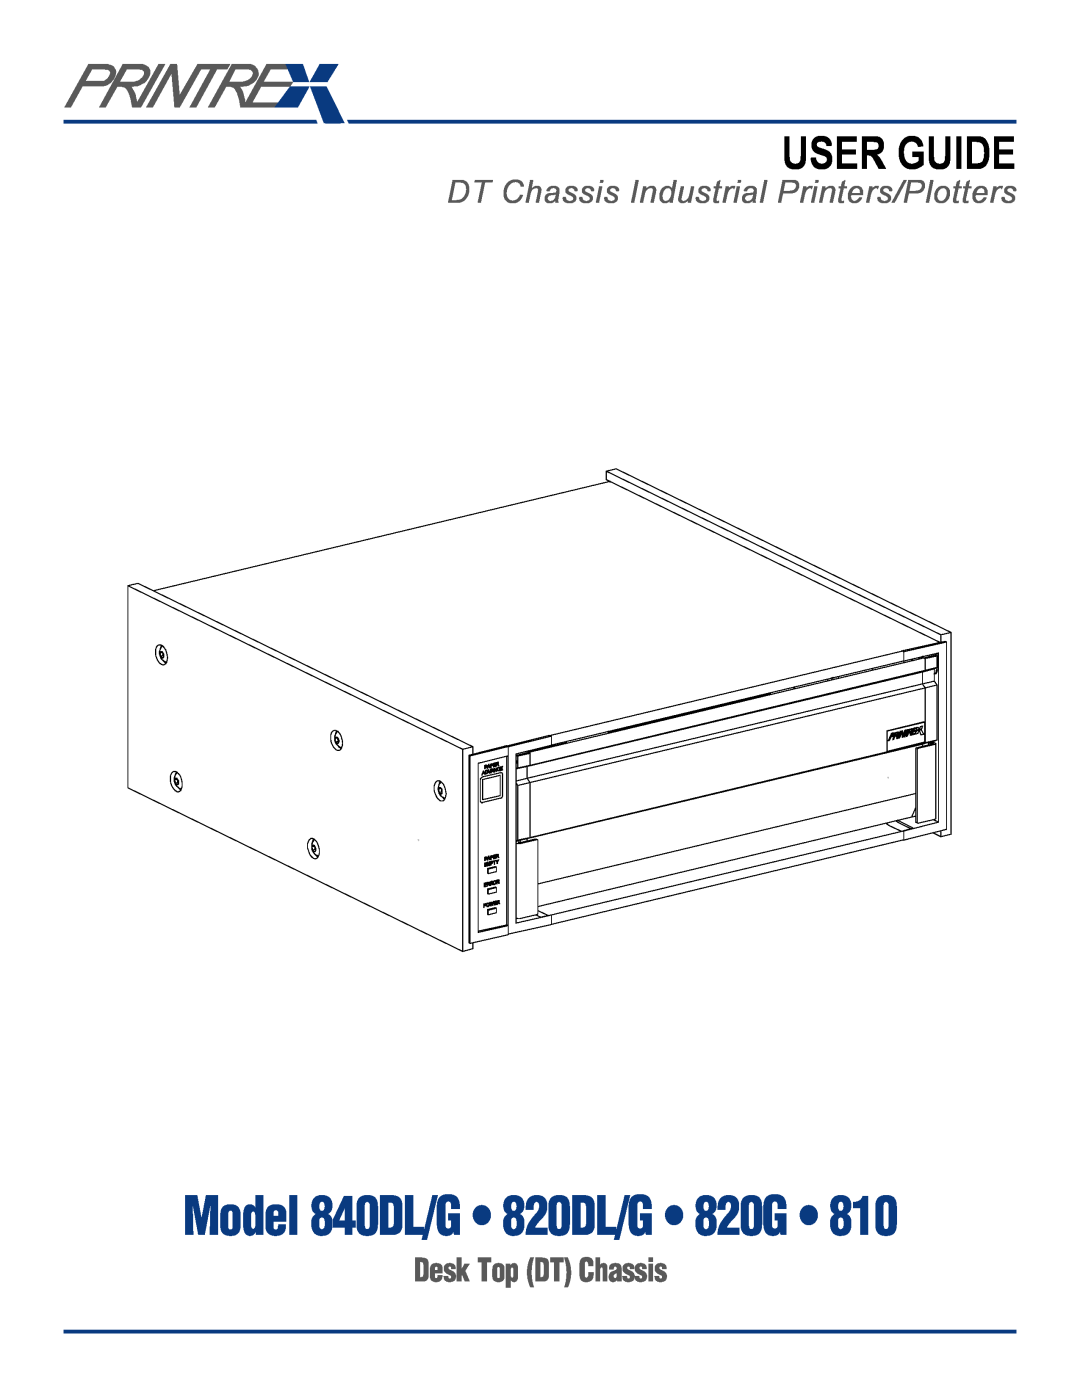 Printek manual DT Chassis Industrial Printers/Plotters, Model 840DL/G 820DL/G 820G, User Guide, Desk Top DT Chassis 